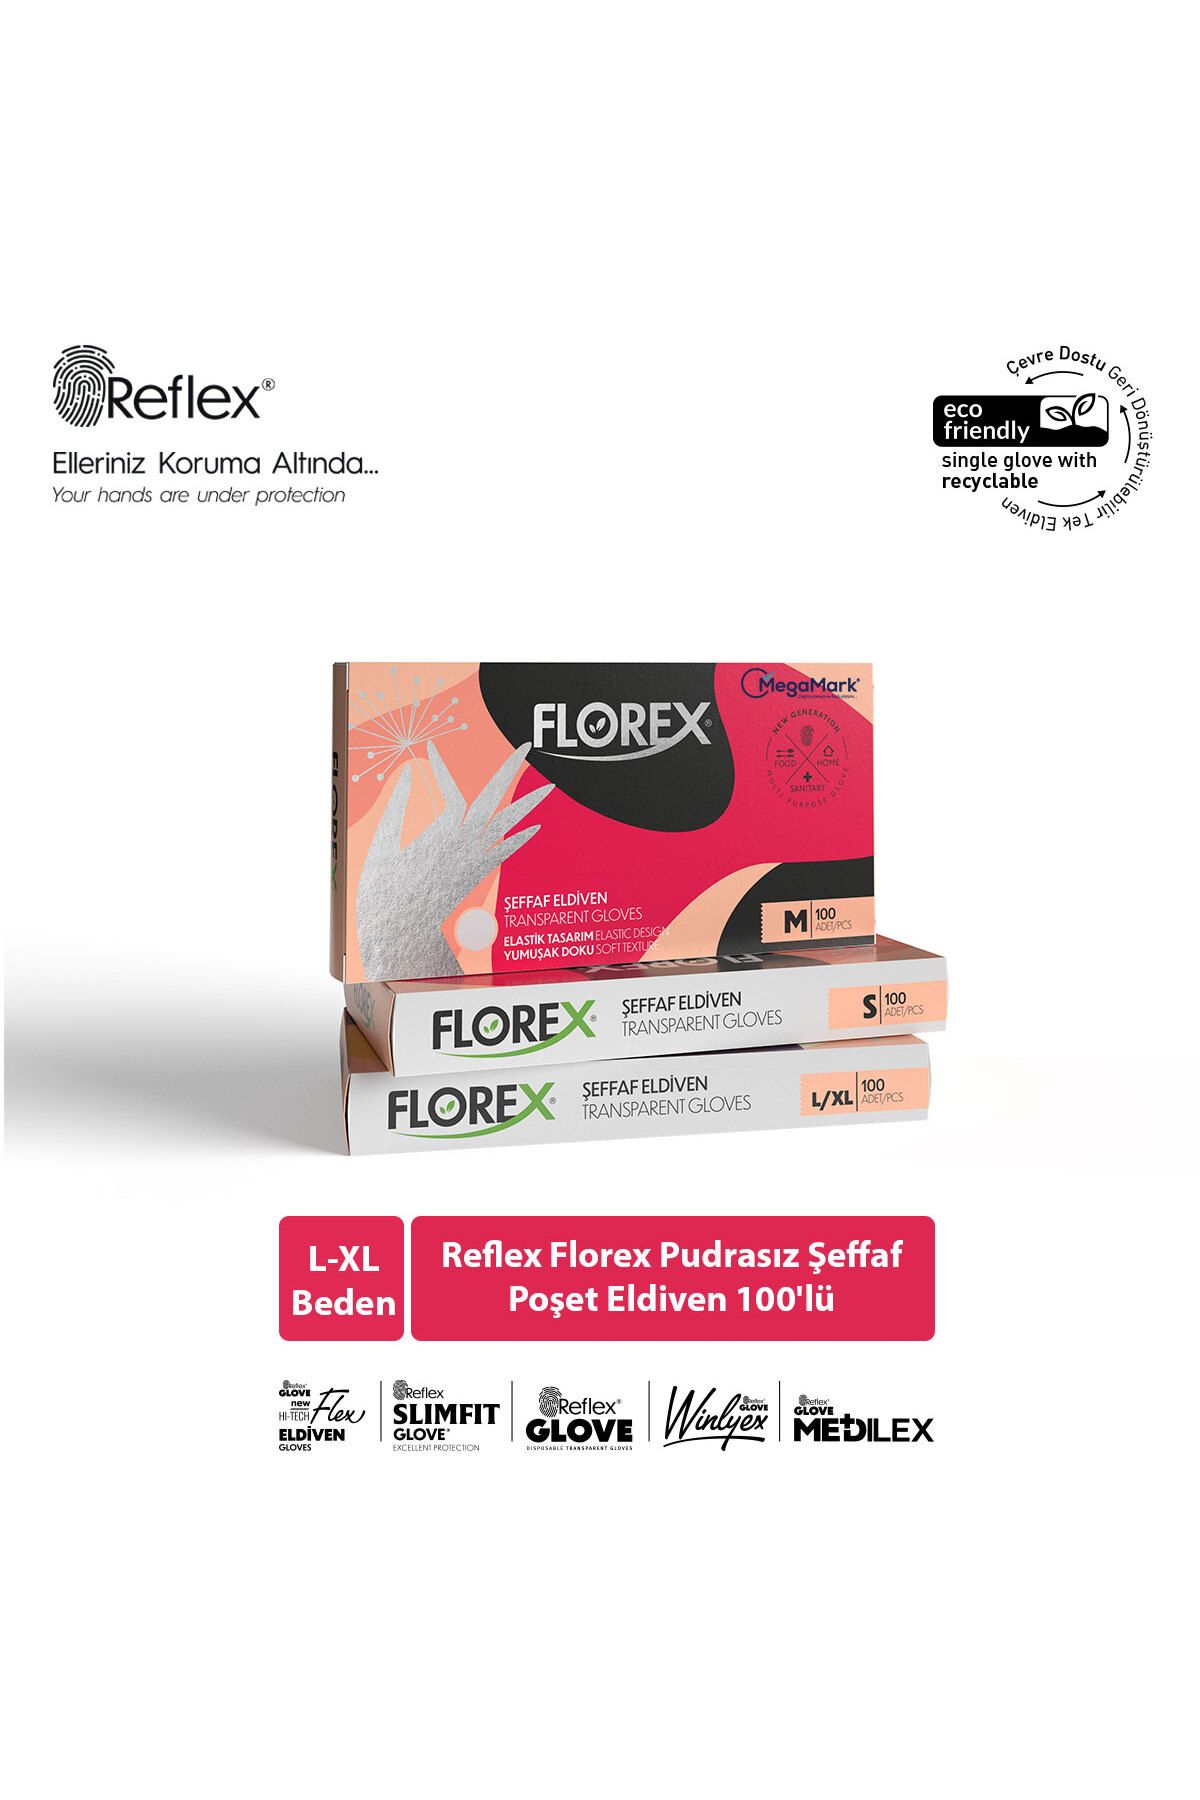 Reflex Florex Pudrasız Şeffaf Poşet Eldiven L-XL Beden 100'lü